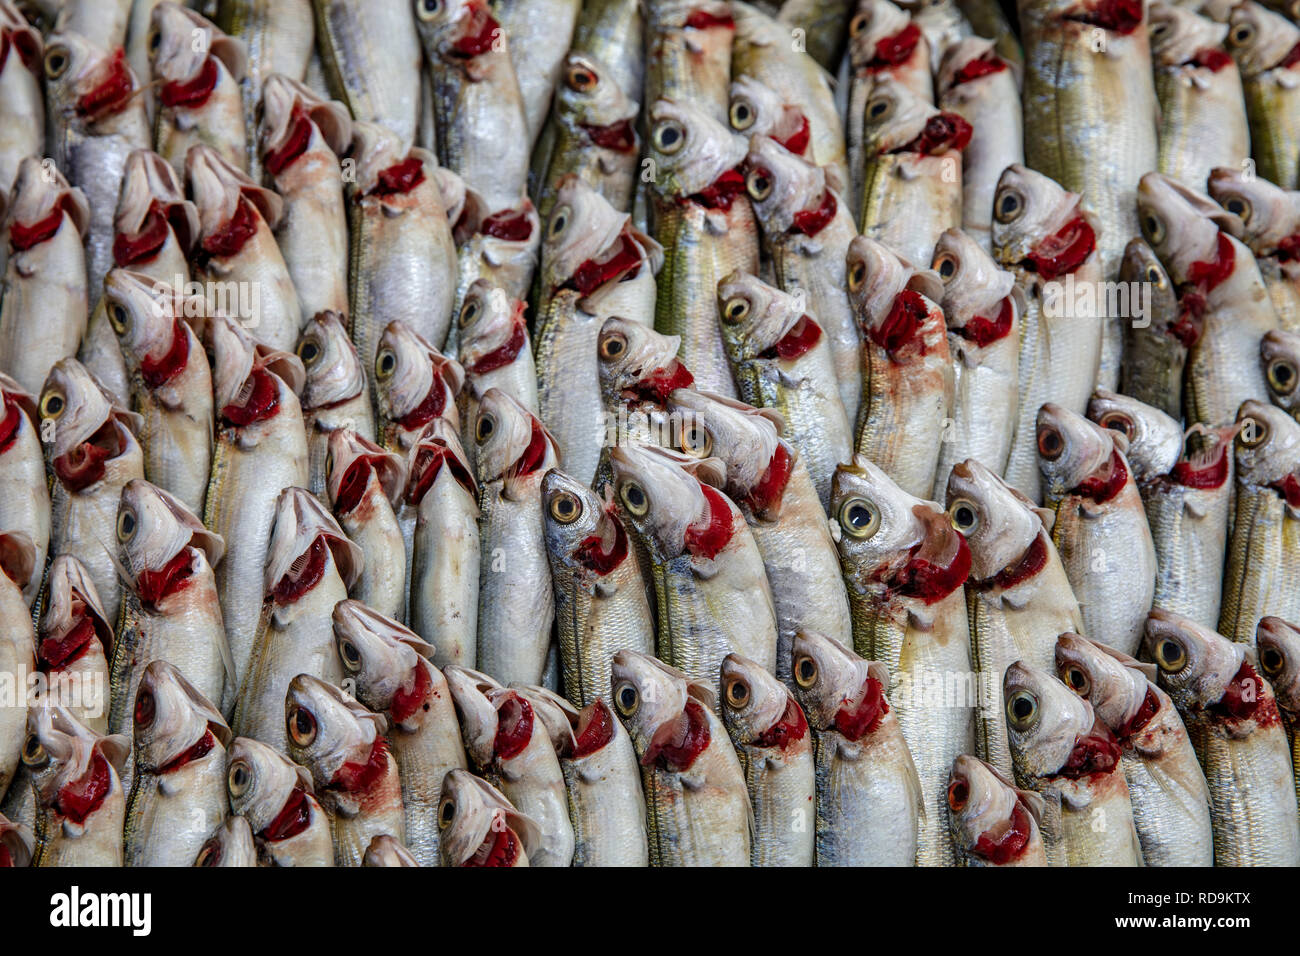 haddock in the fish market Stock Photo